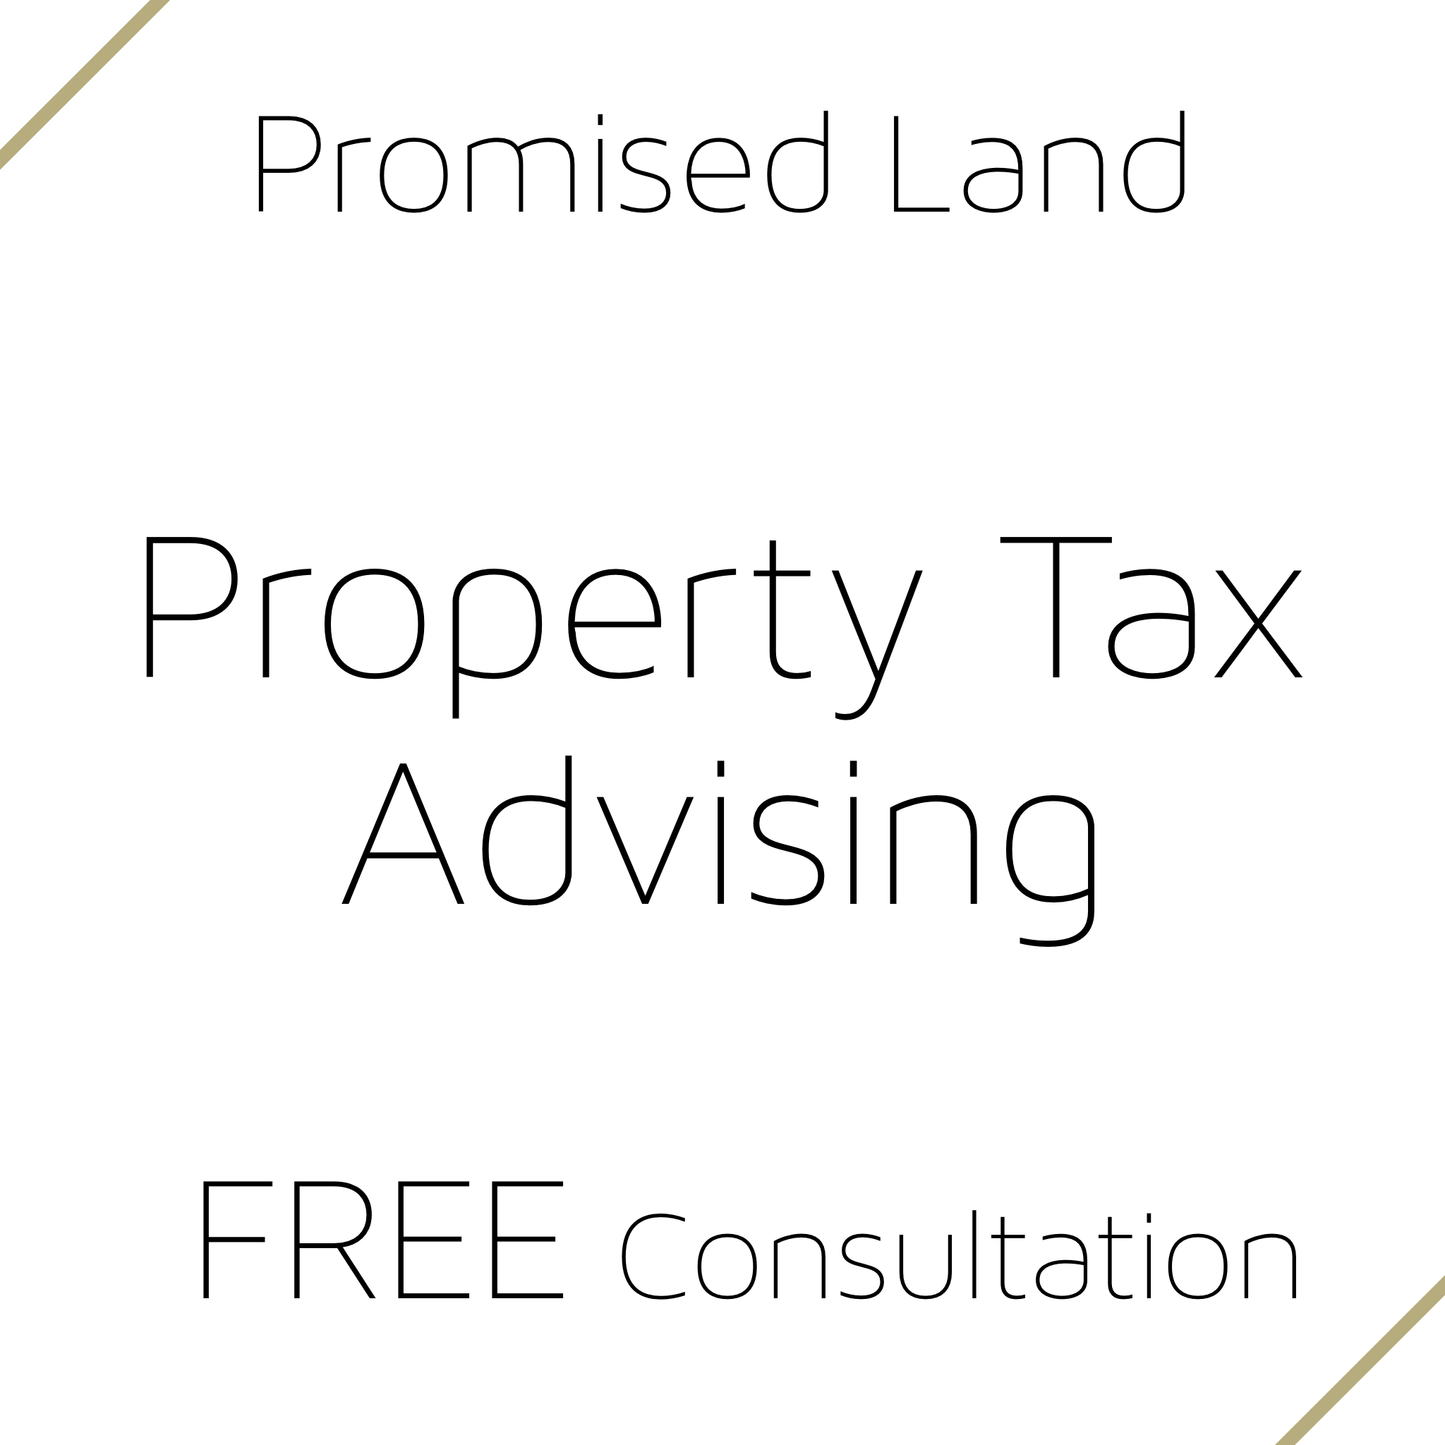 Property Tax Advising FREE Consultation